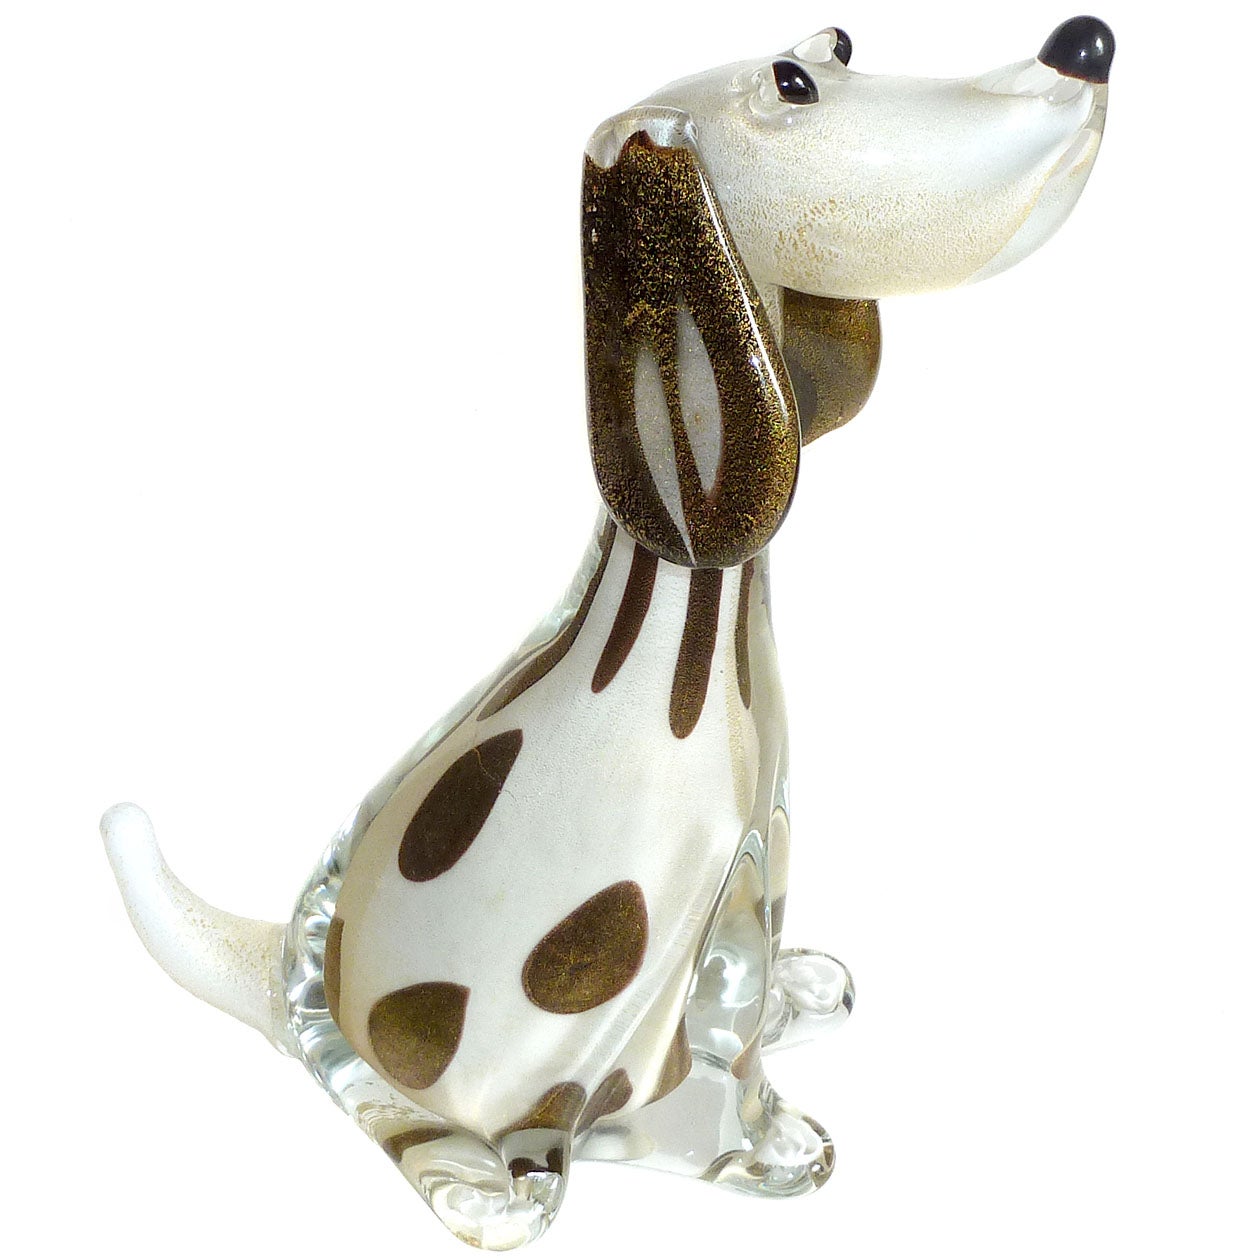 Cute Alfredo Barbini Murano Dalmatian Puppy Dog Italian Art Glass Sculpture